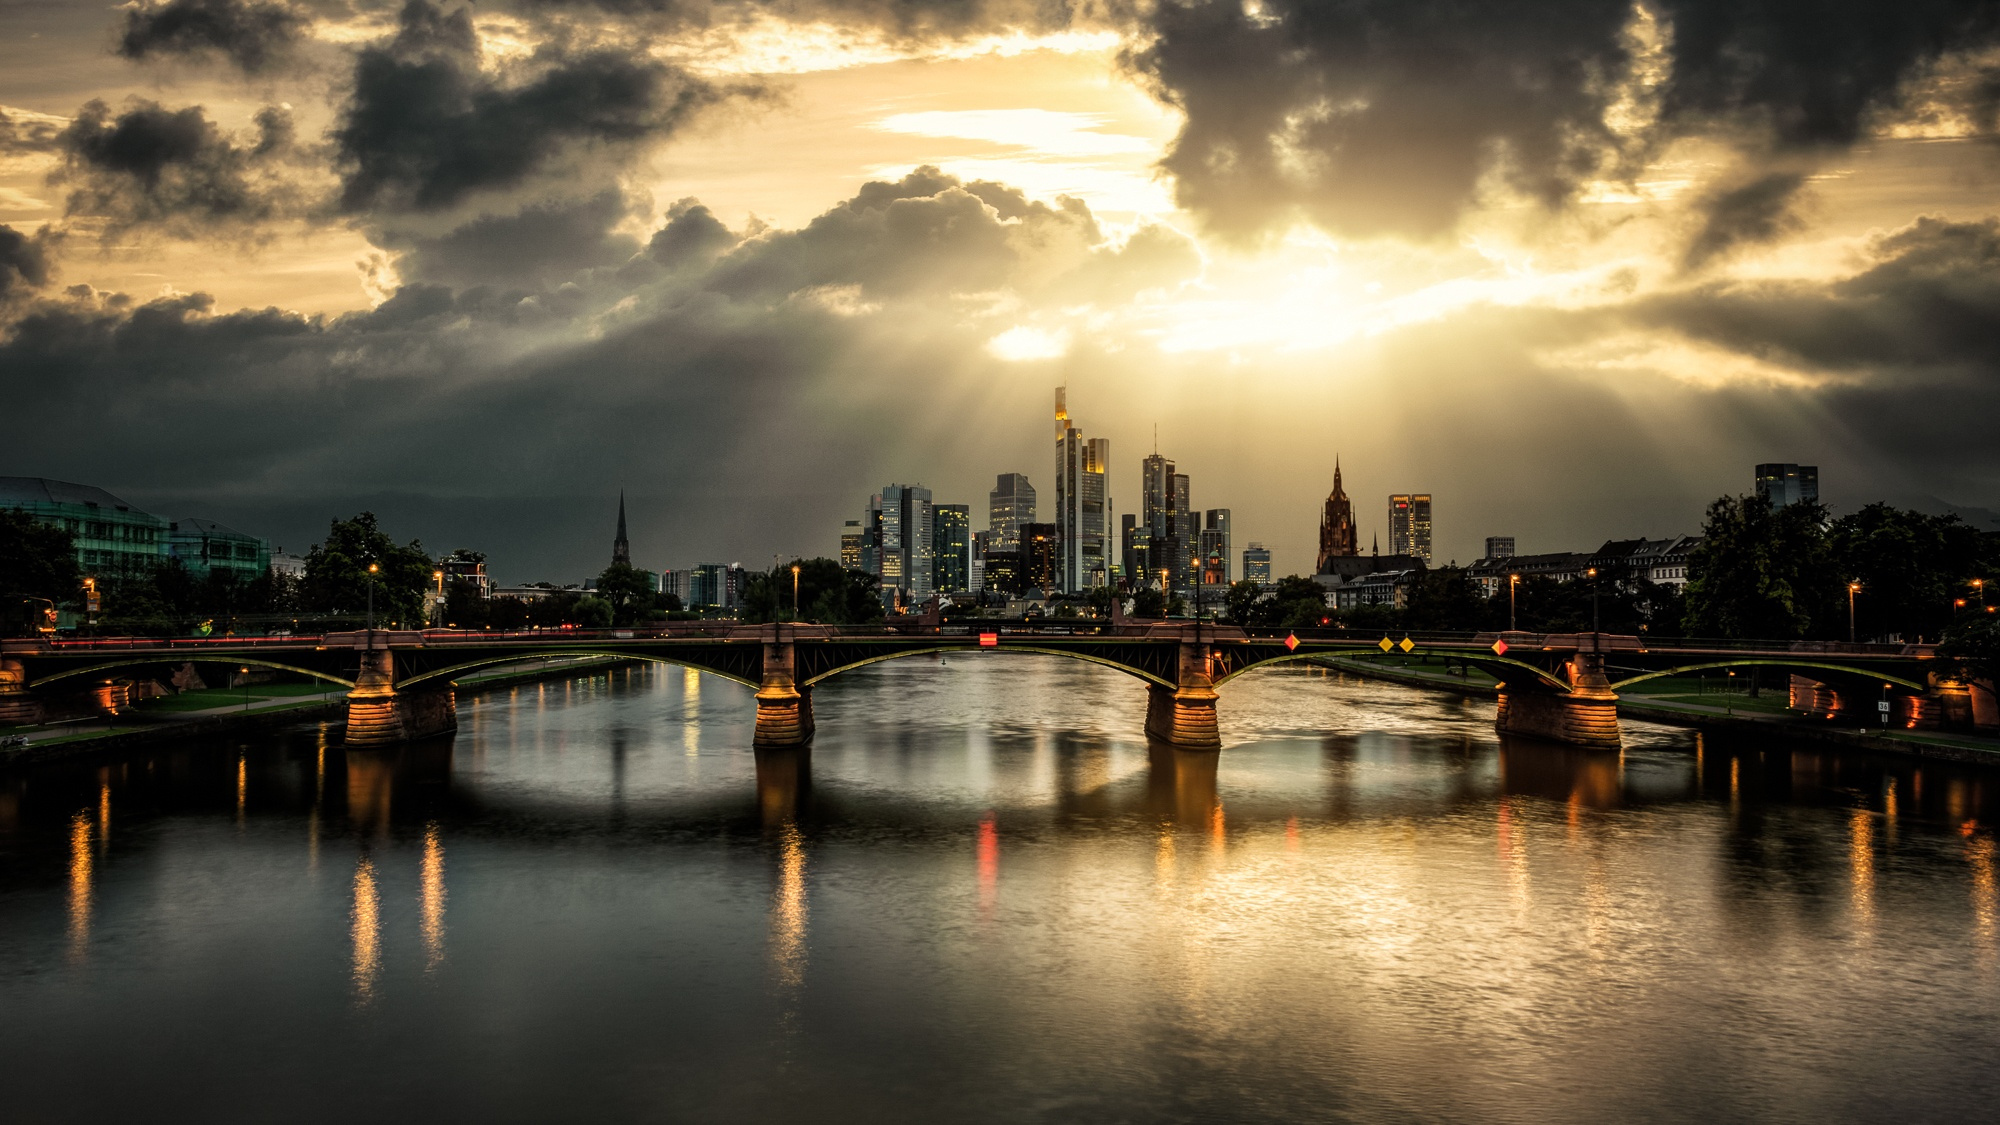 germany, cities, man made, frankfurt, bridge, building, city, cloud, evening, reflection, river, sky, skyscraper, sunbeam